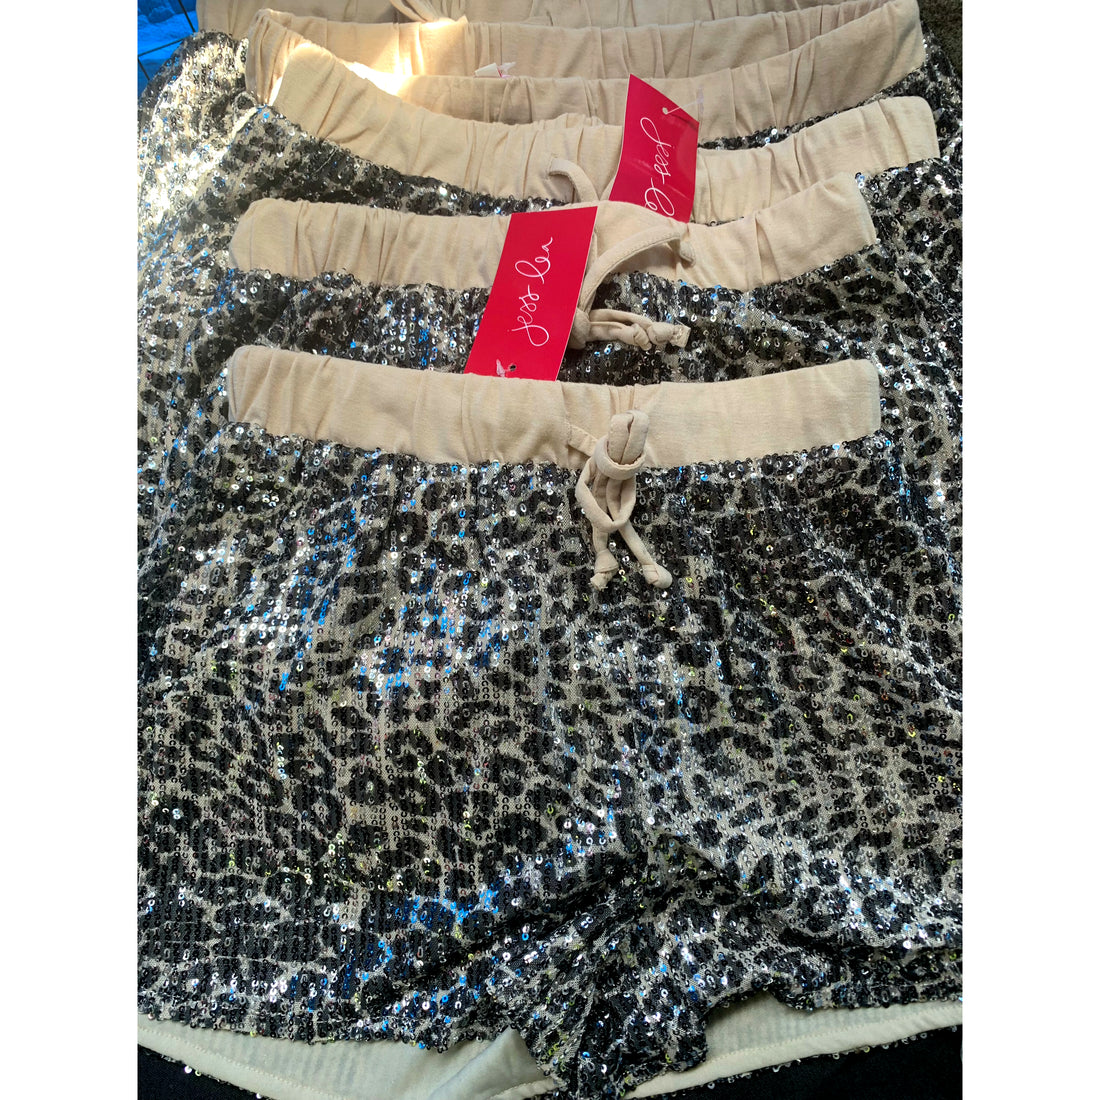 Leopard Sequin Shorts